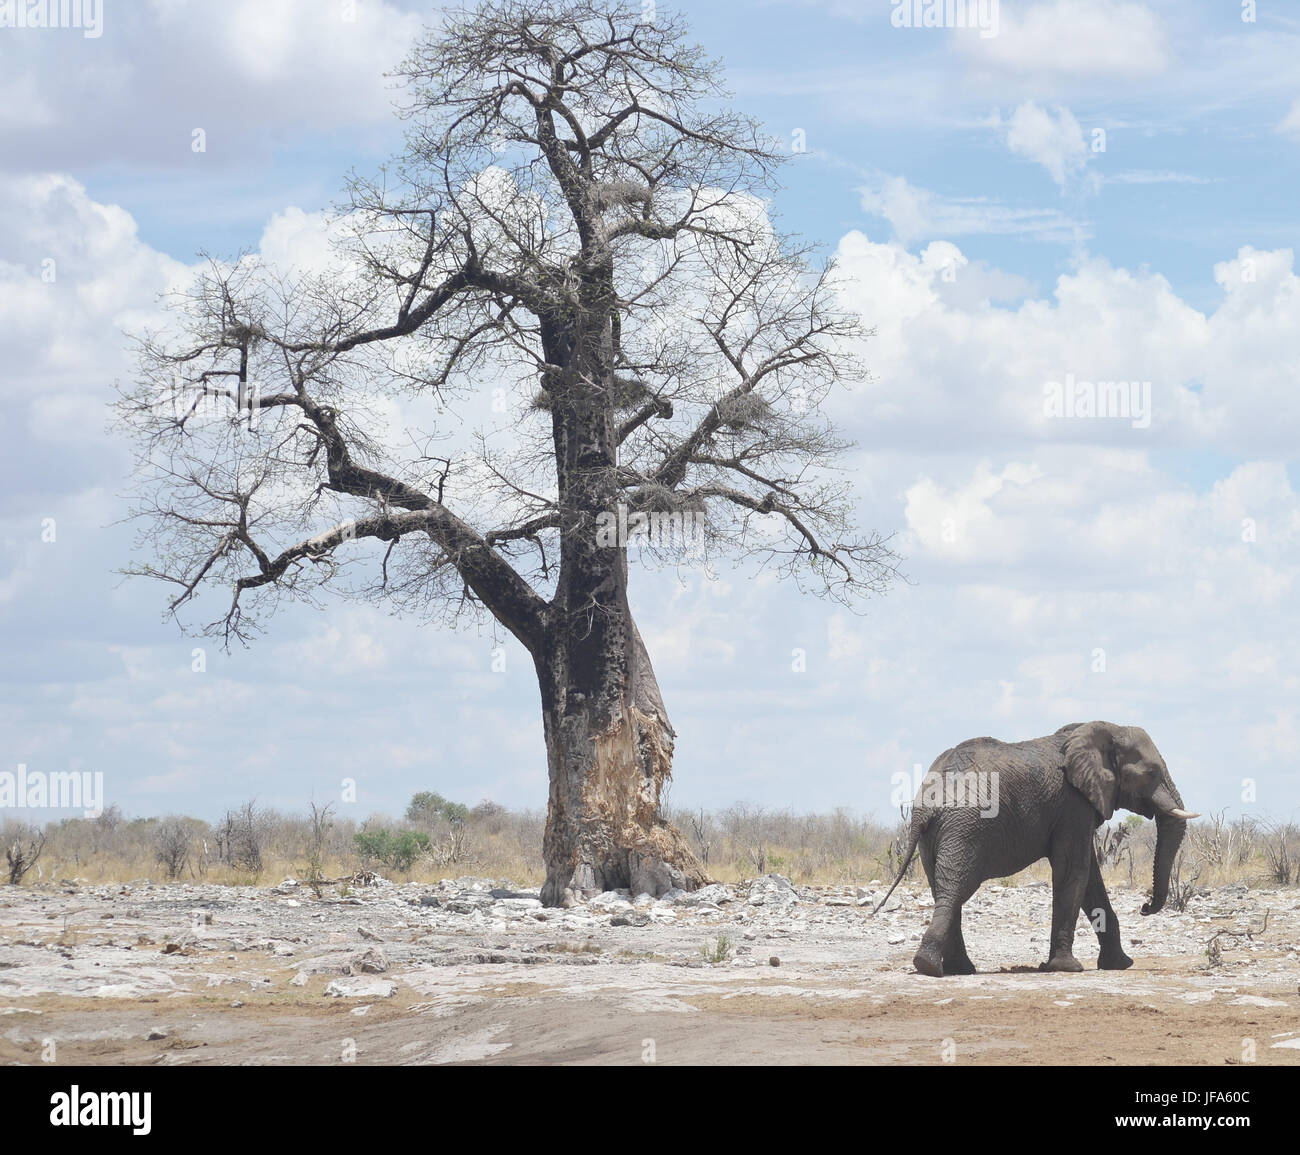 elephant in Africa Stock Photo